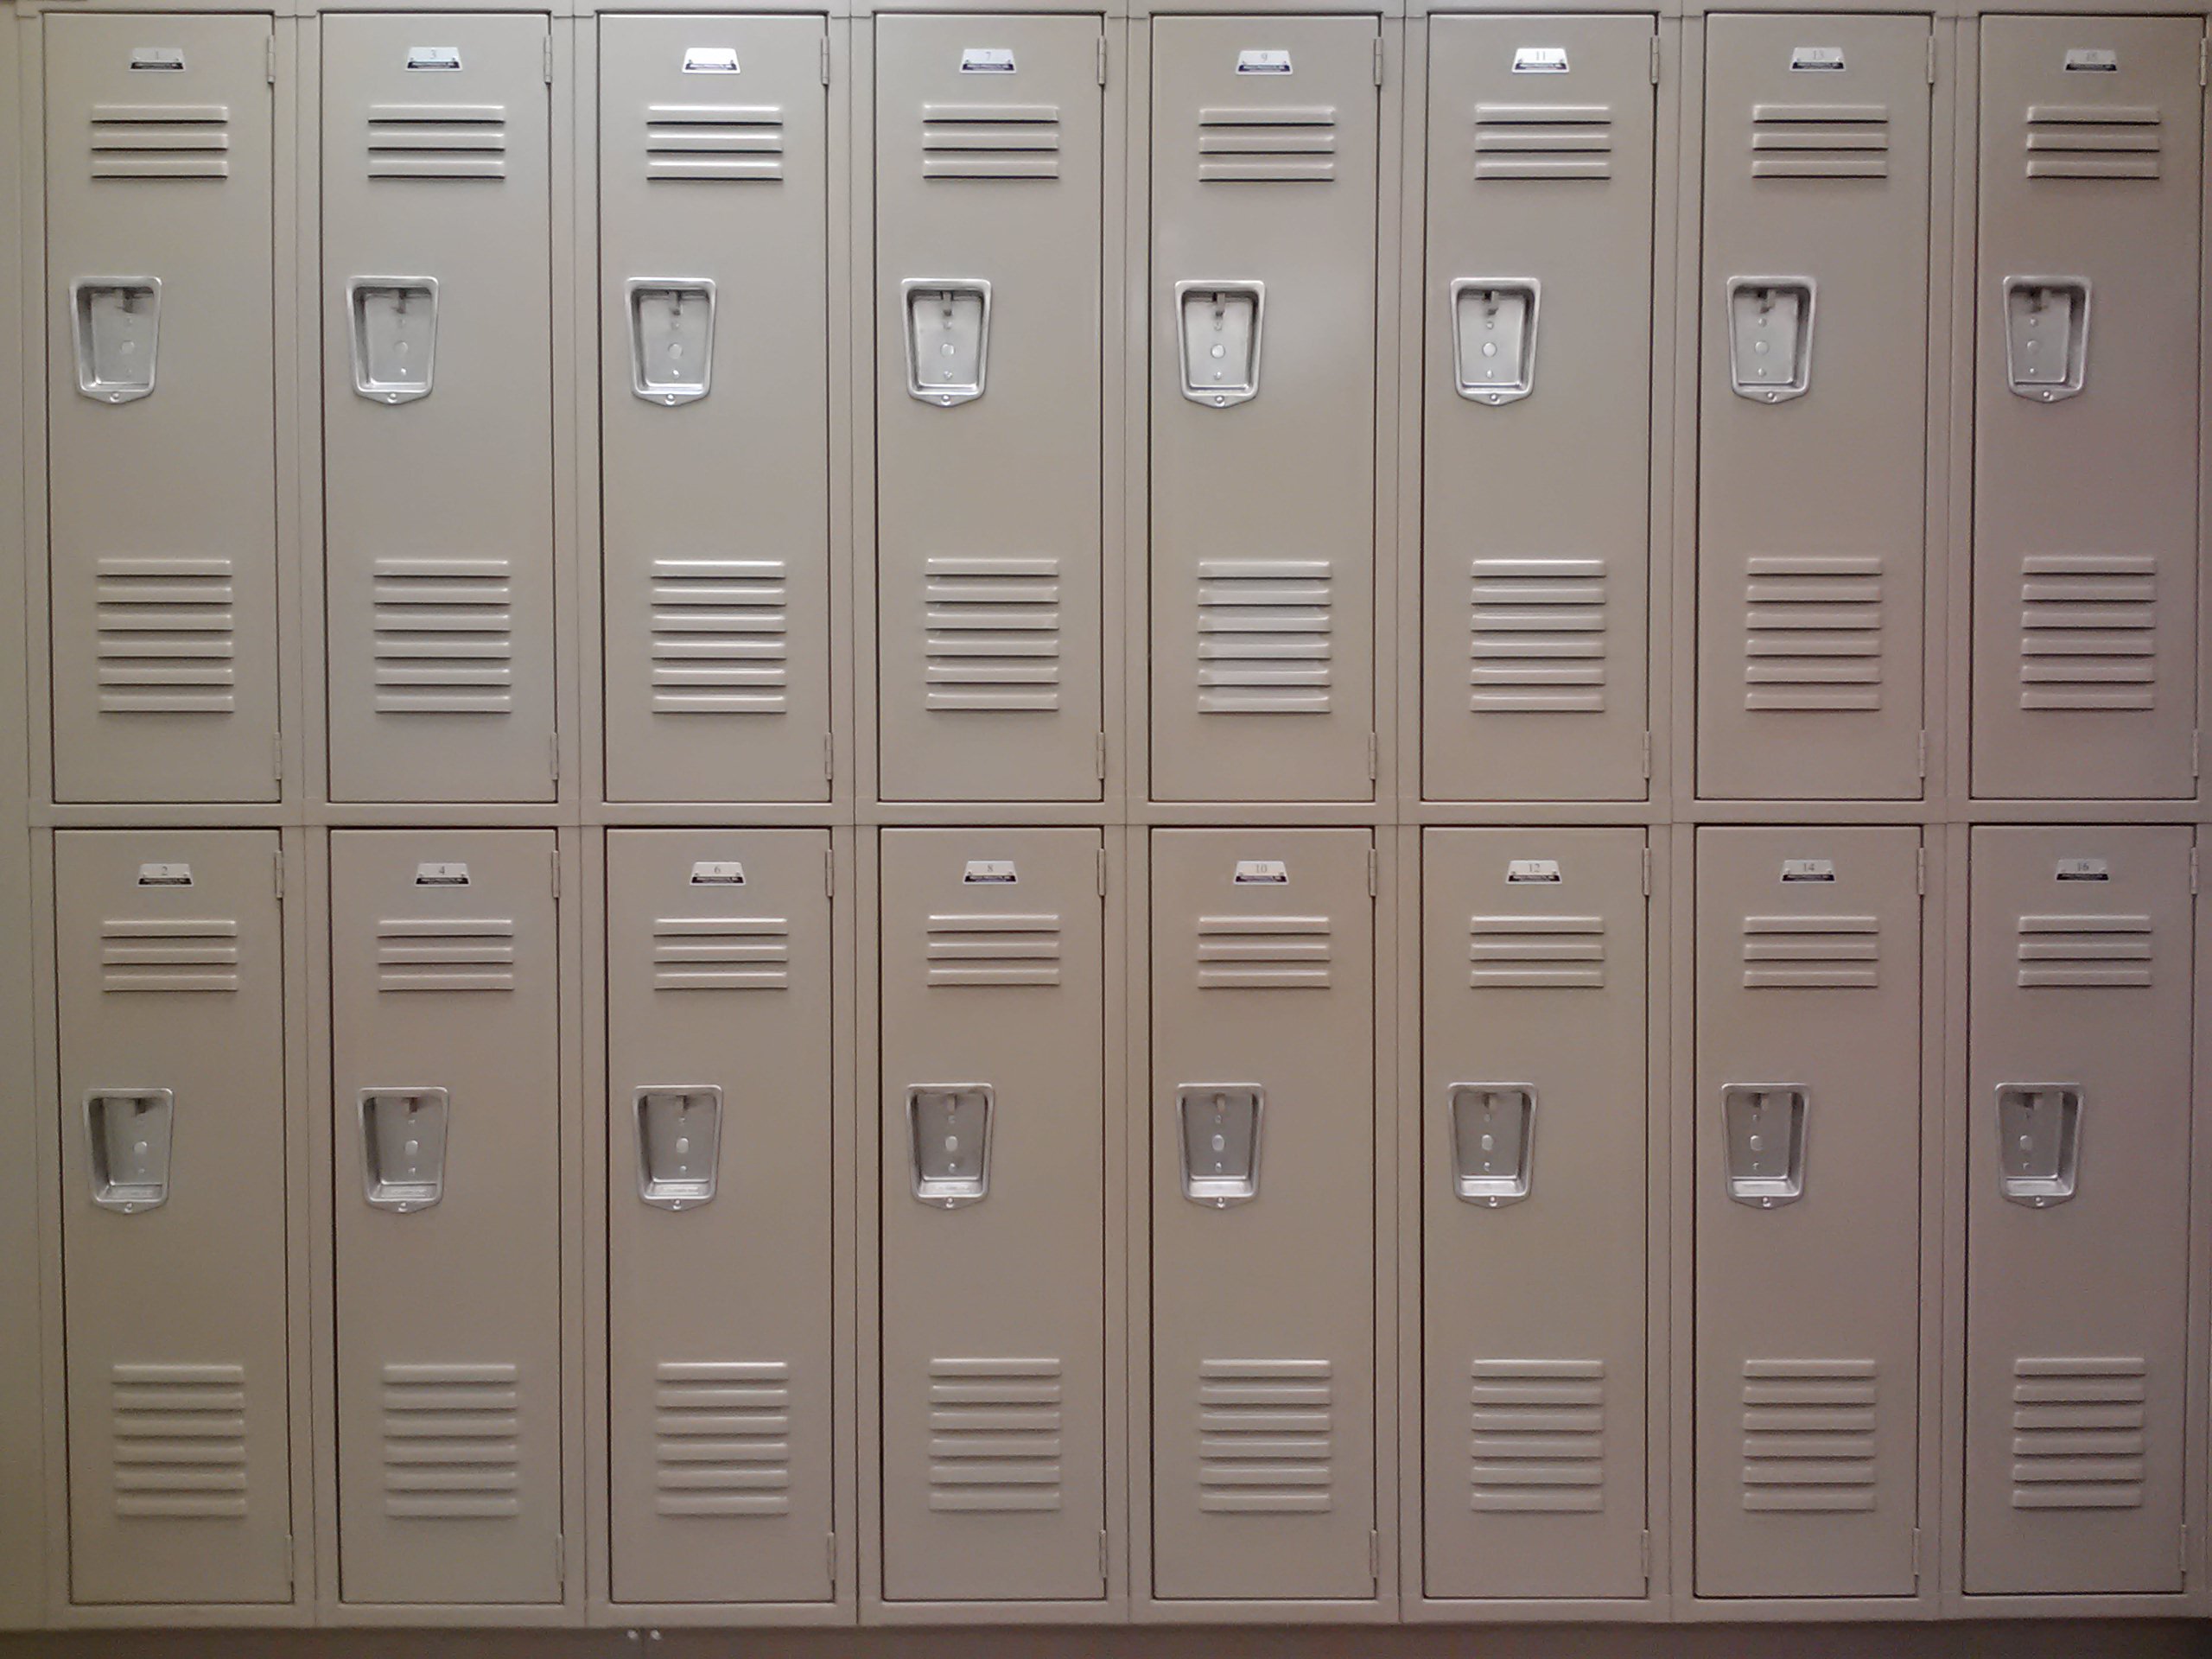 school locker clipart - photo #33